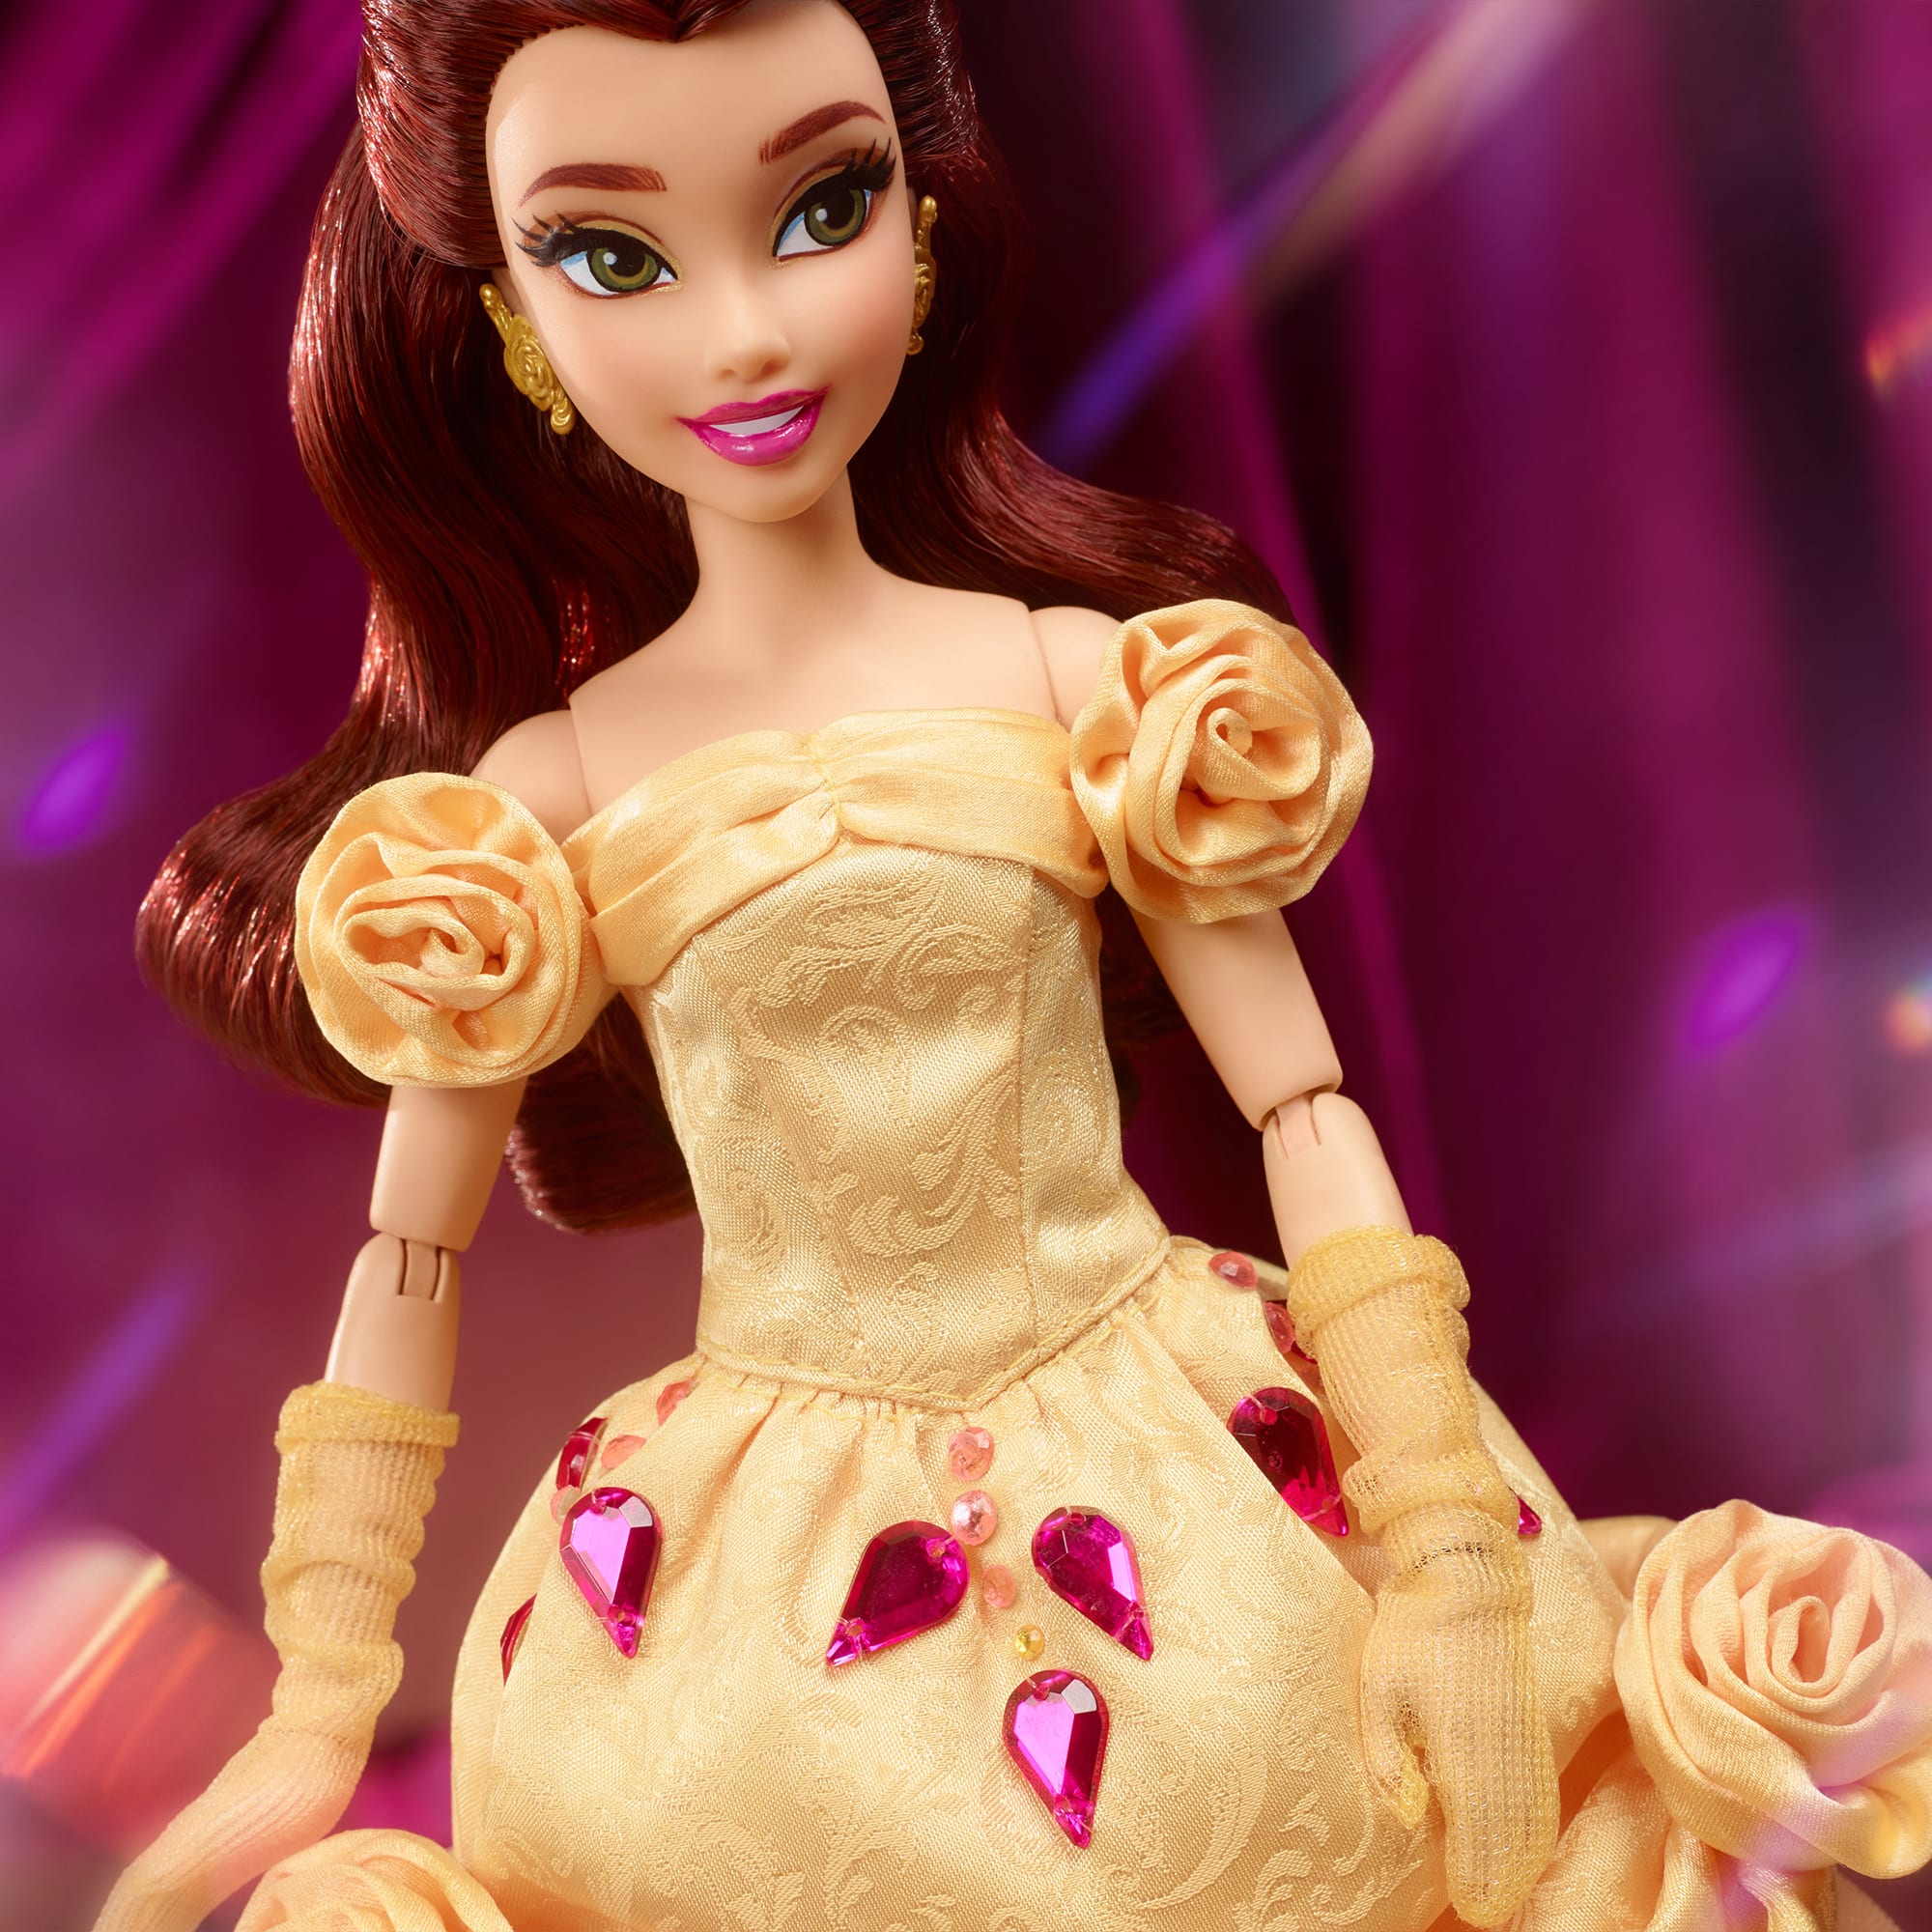 Mattel Disney Princess Radiance Collection dolls: Belle, Sleeping